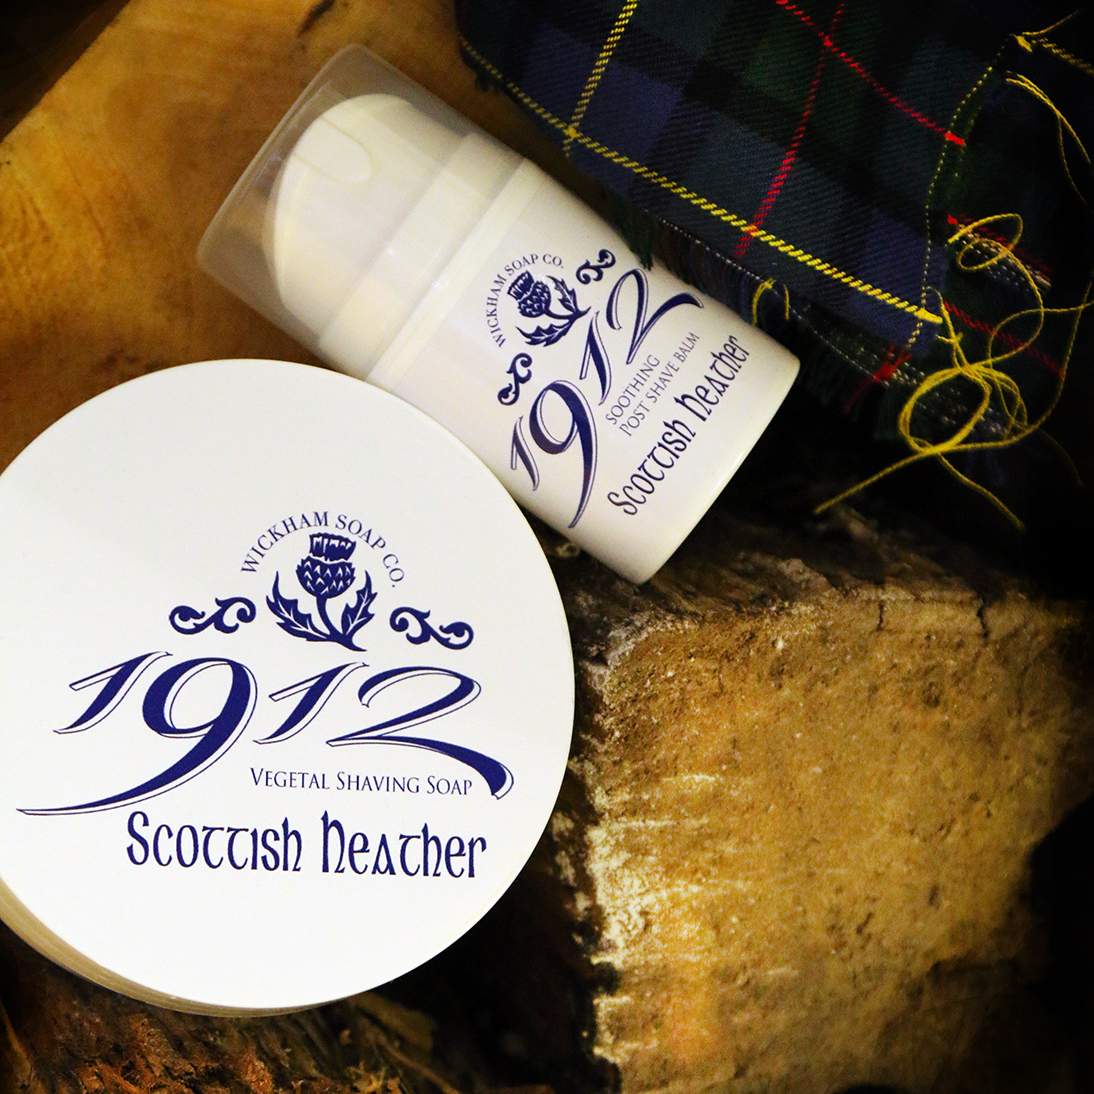 Wickham Soap Co 1912 Scottish Heather Shaving Soap | Agent Shave